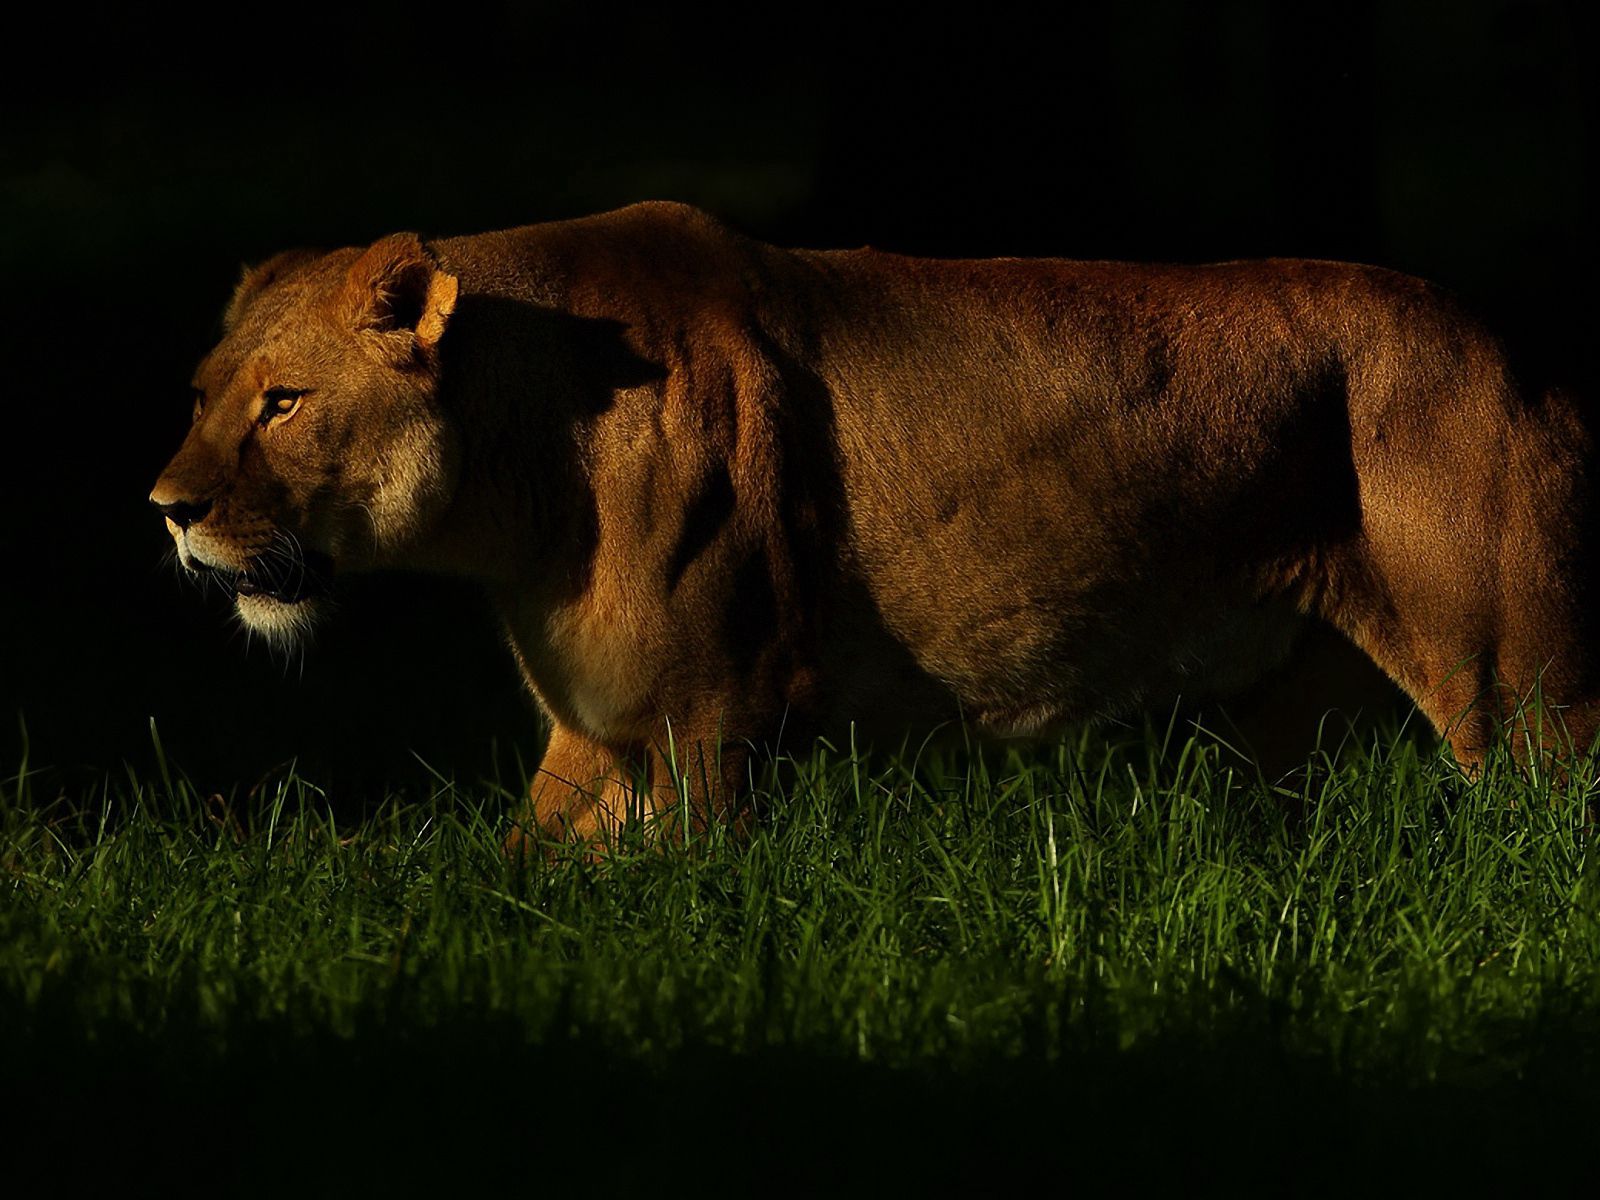 Download wallpaper 1600x1200 lion, shadow, dark, grass, walking, hunting,  predator standard 4:3 hd background